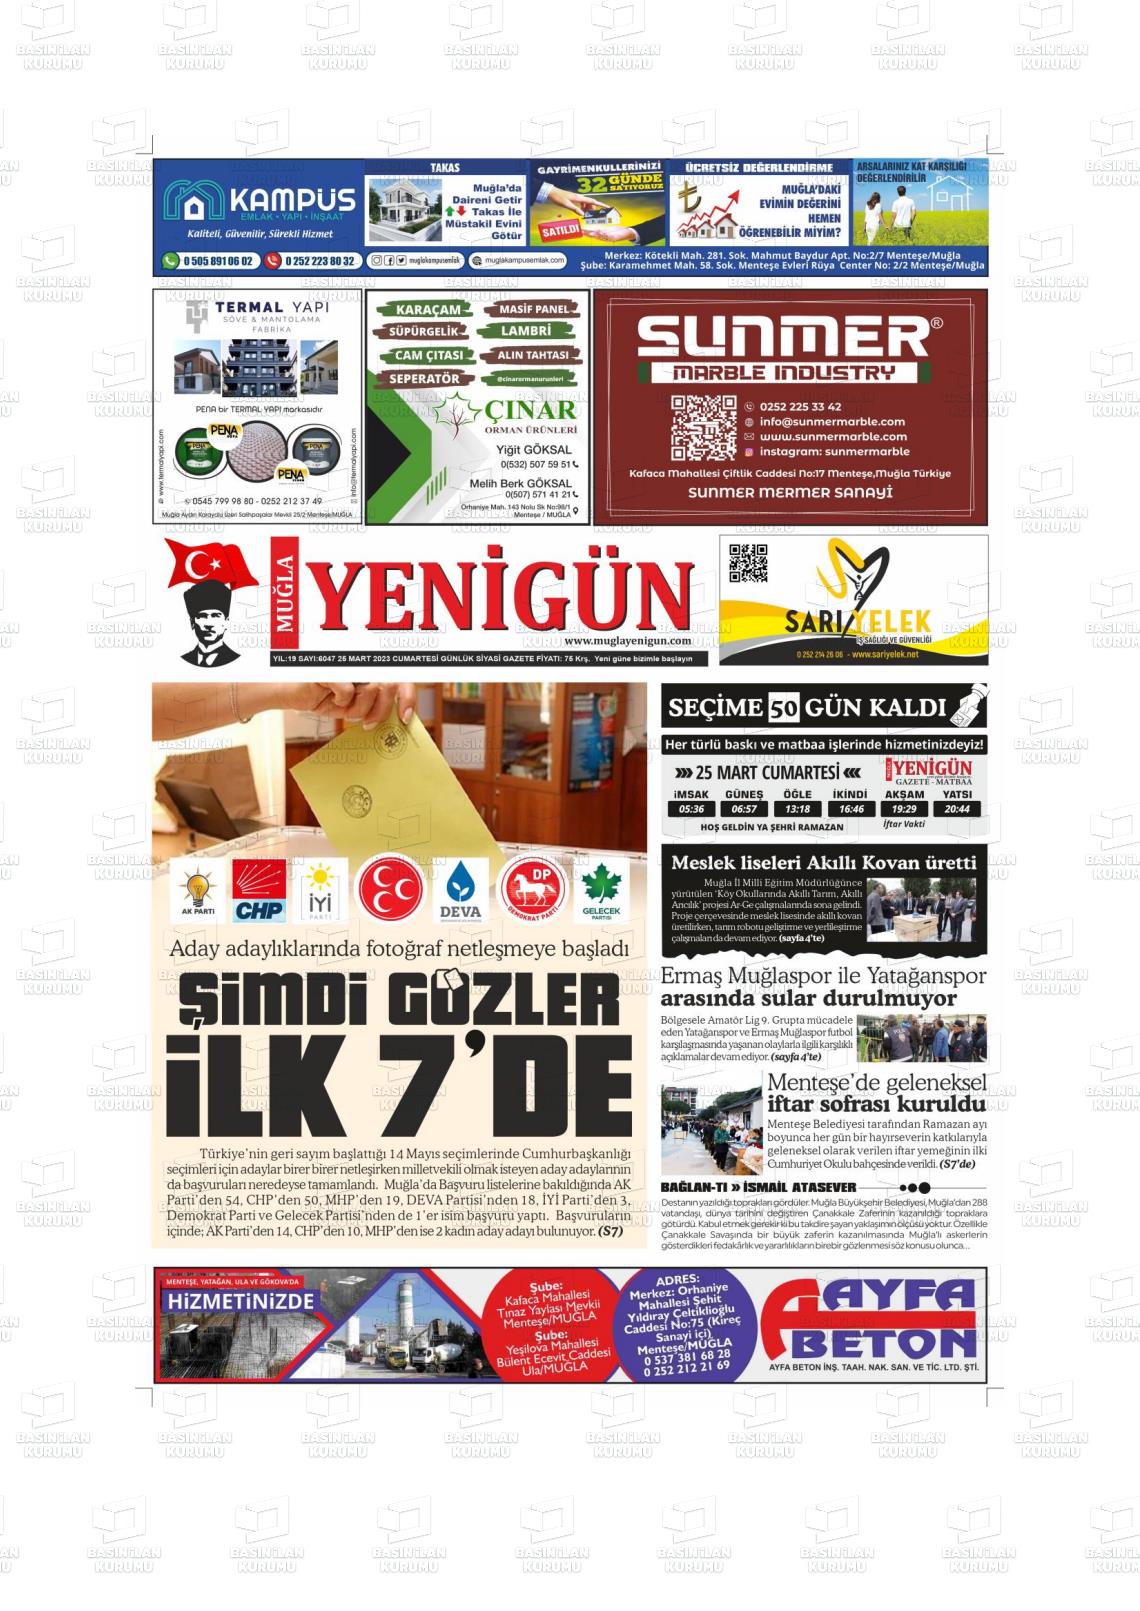 25 Mart 2023 Muğla Yenigün Gazete Manşeti